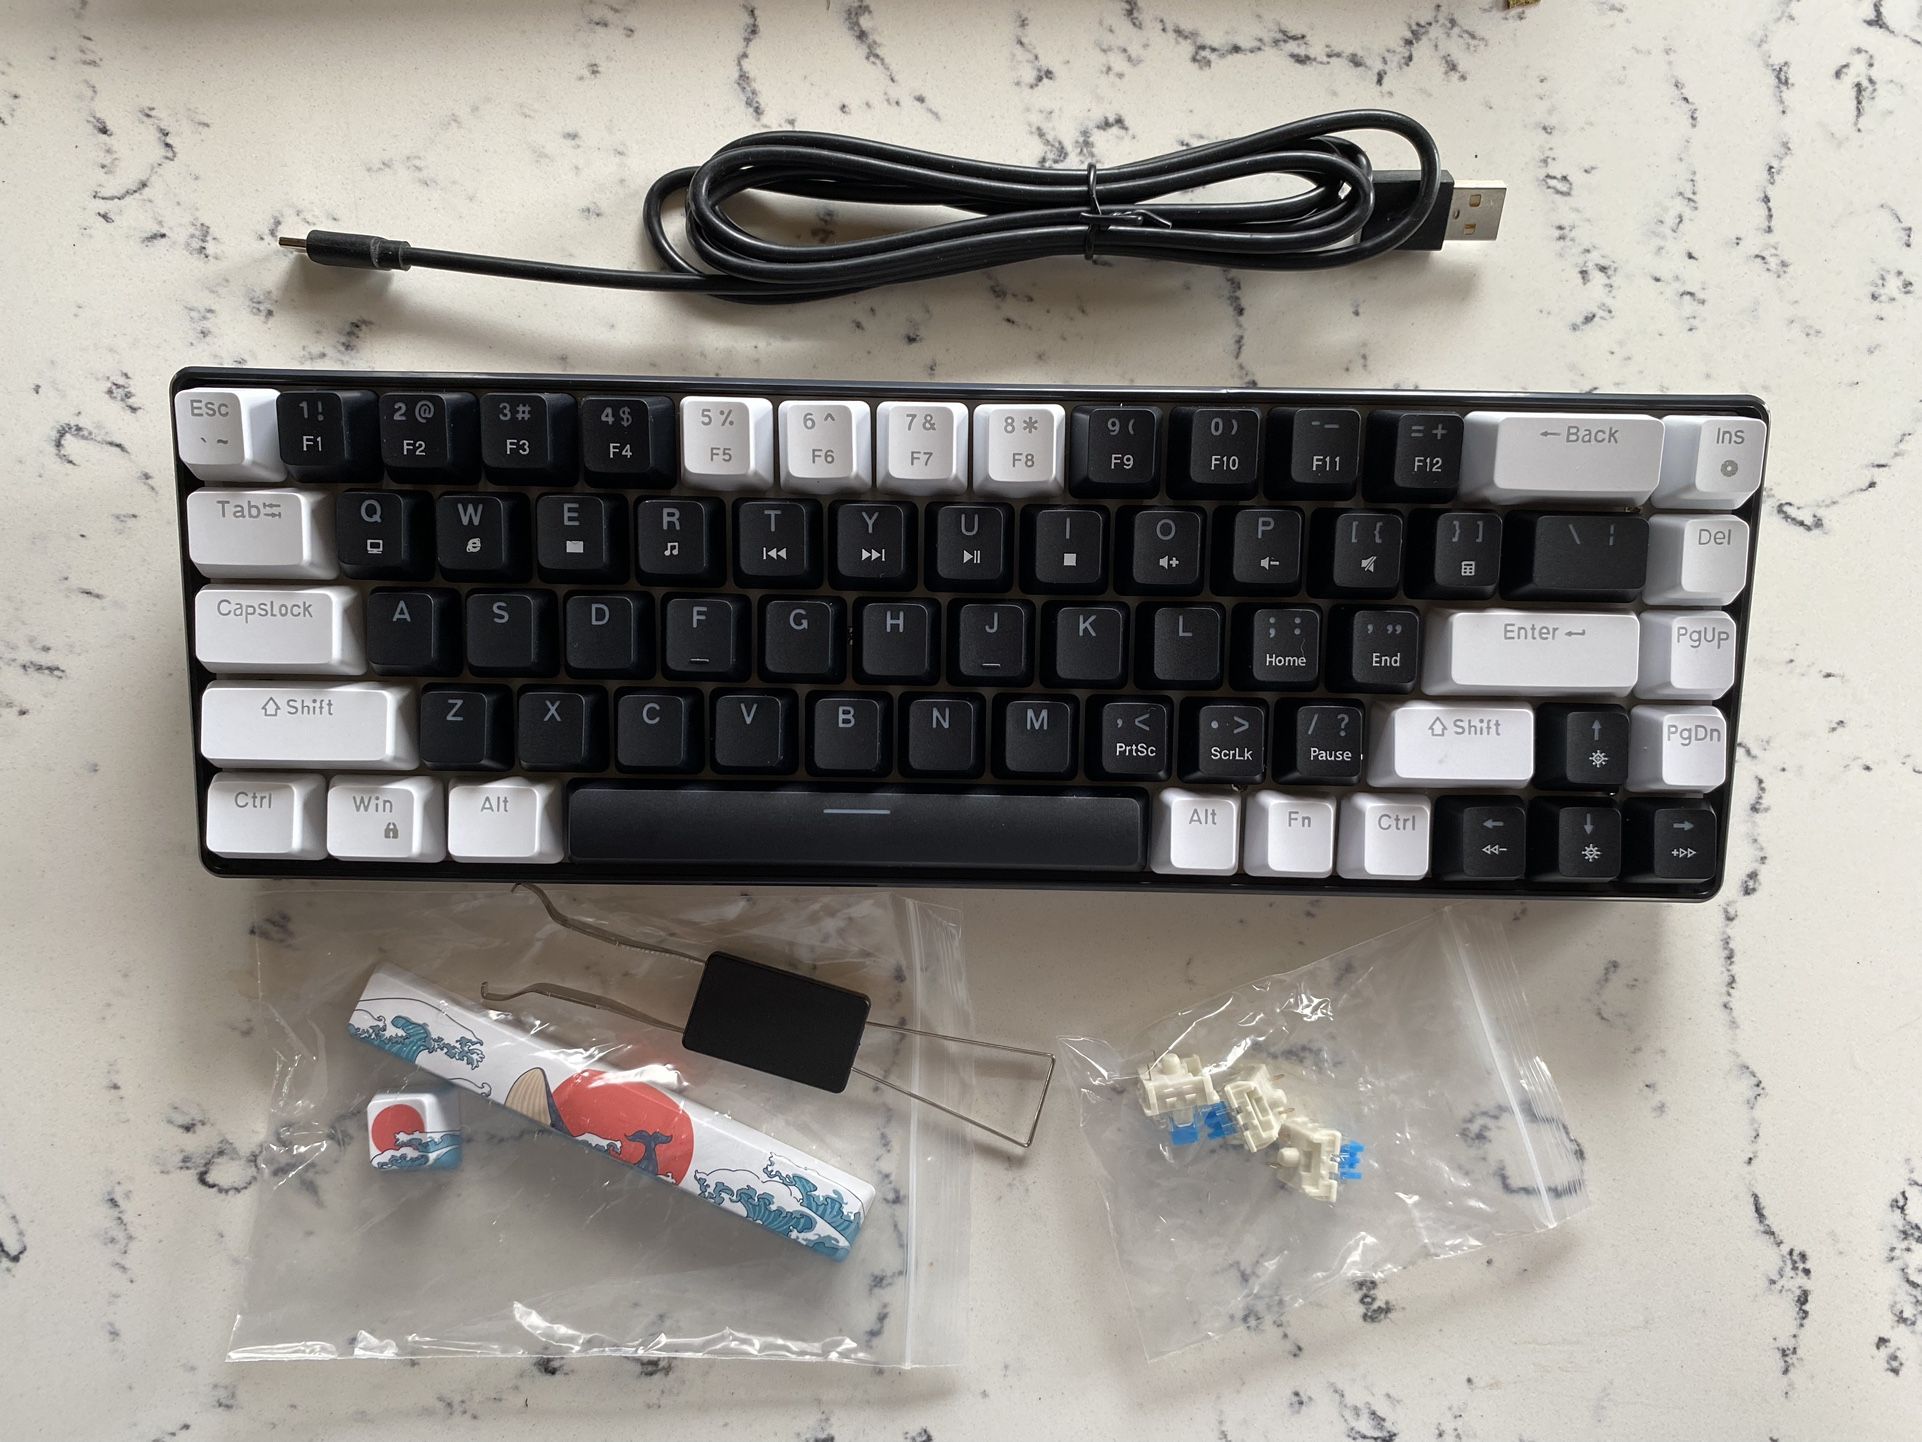 Mechanic keyboard Gamer/ Teclado Gamer Mecánico